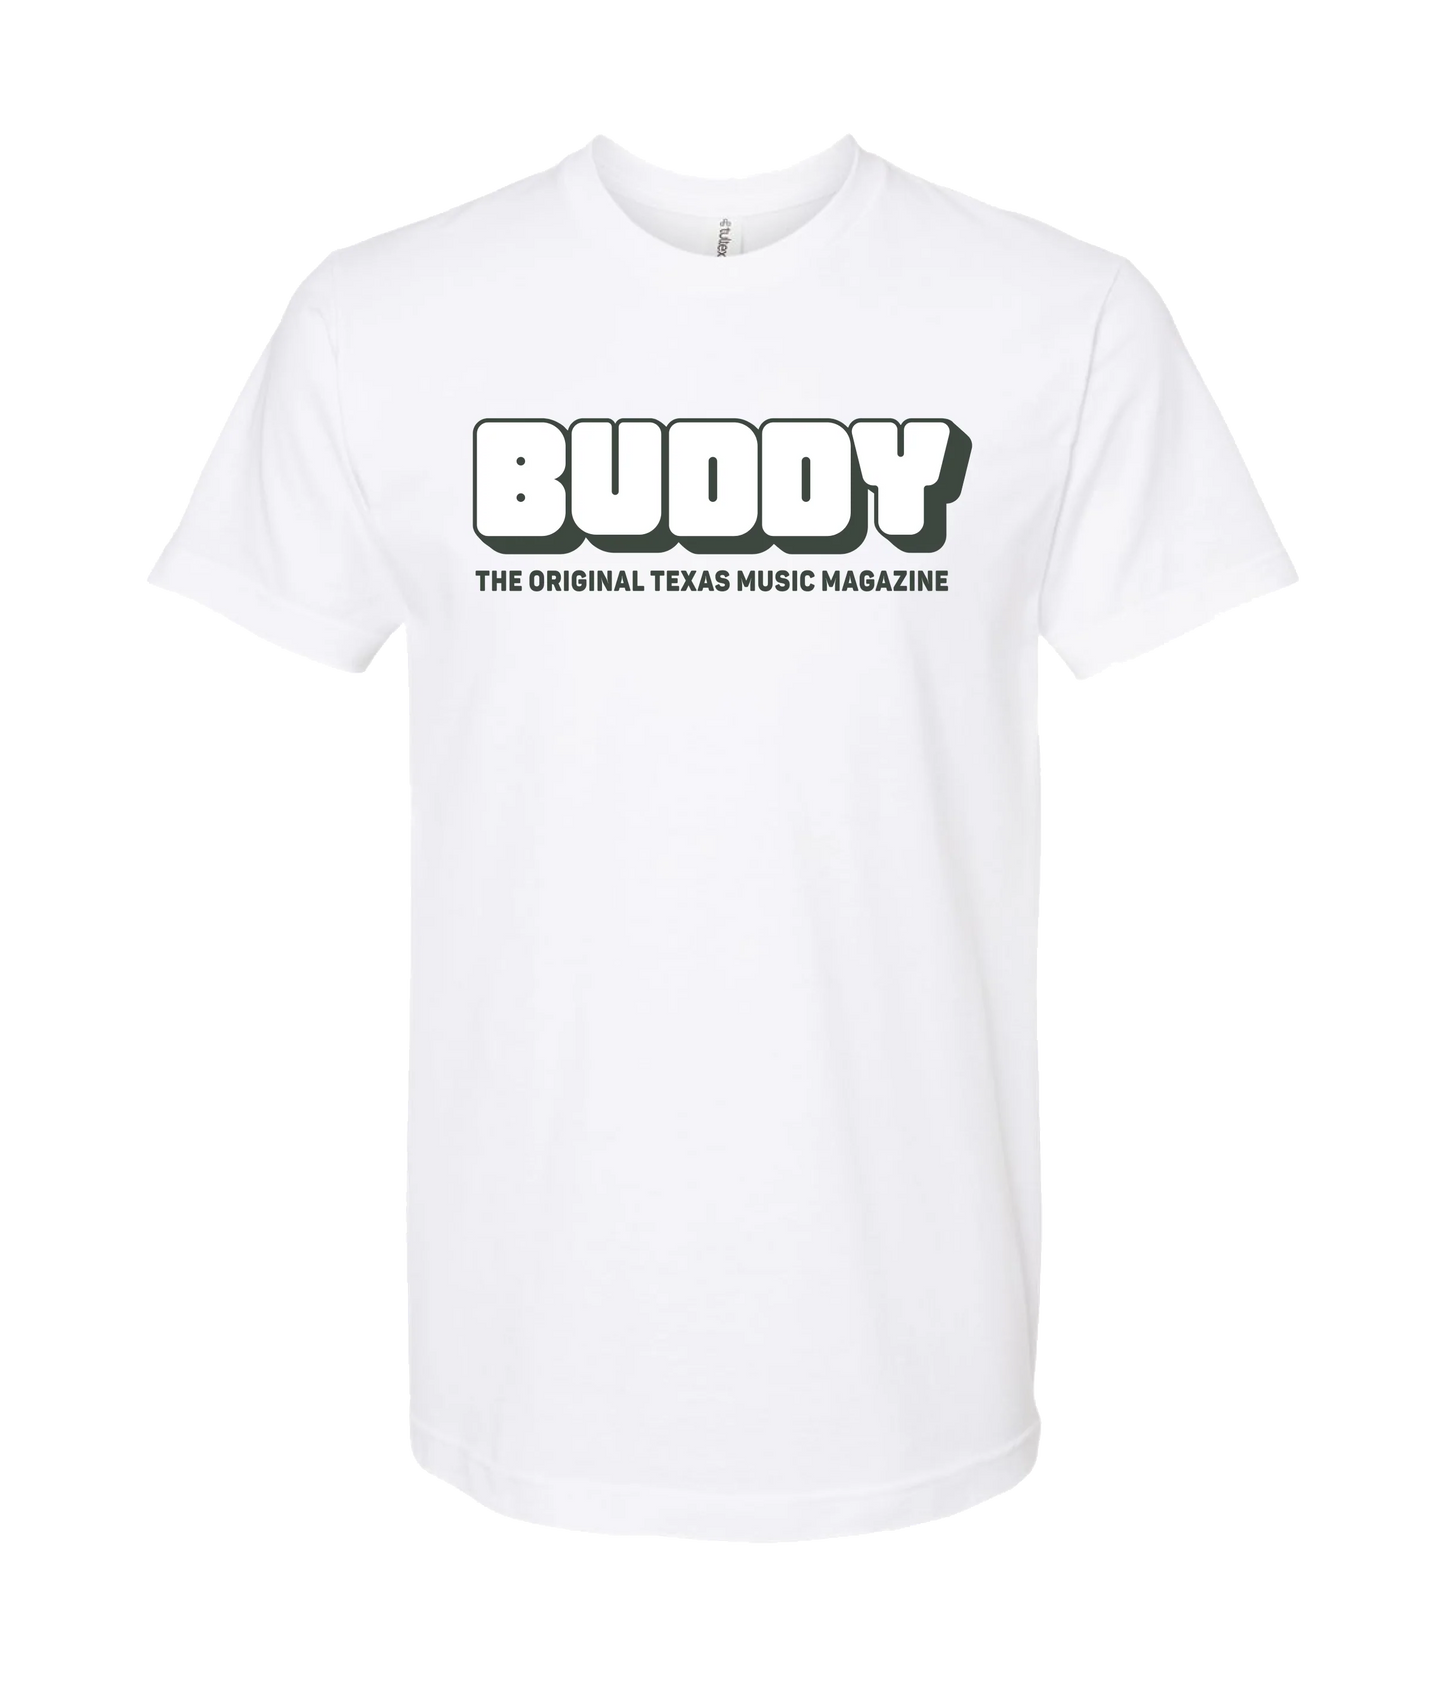 Buddy Magazine - 73 Logo - White T-Shirt